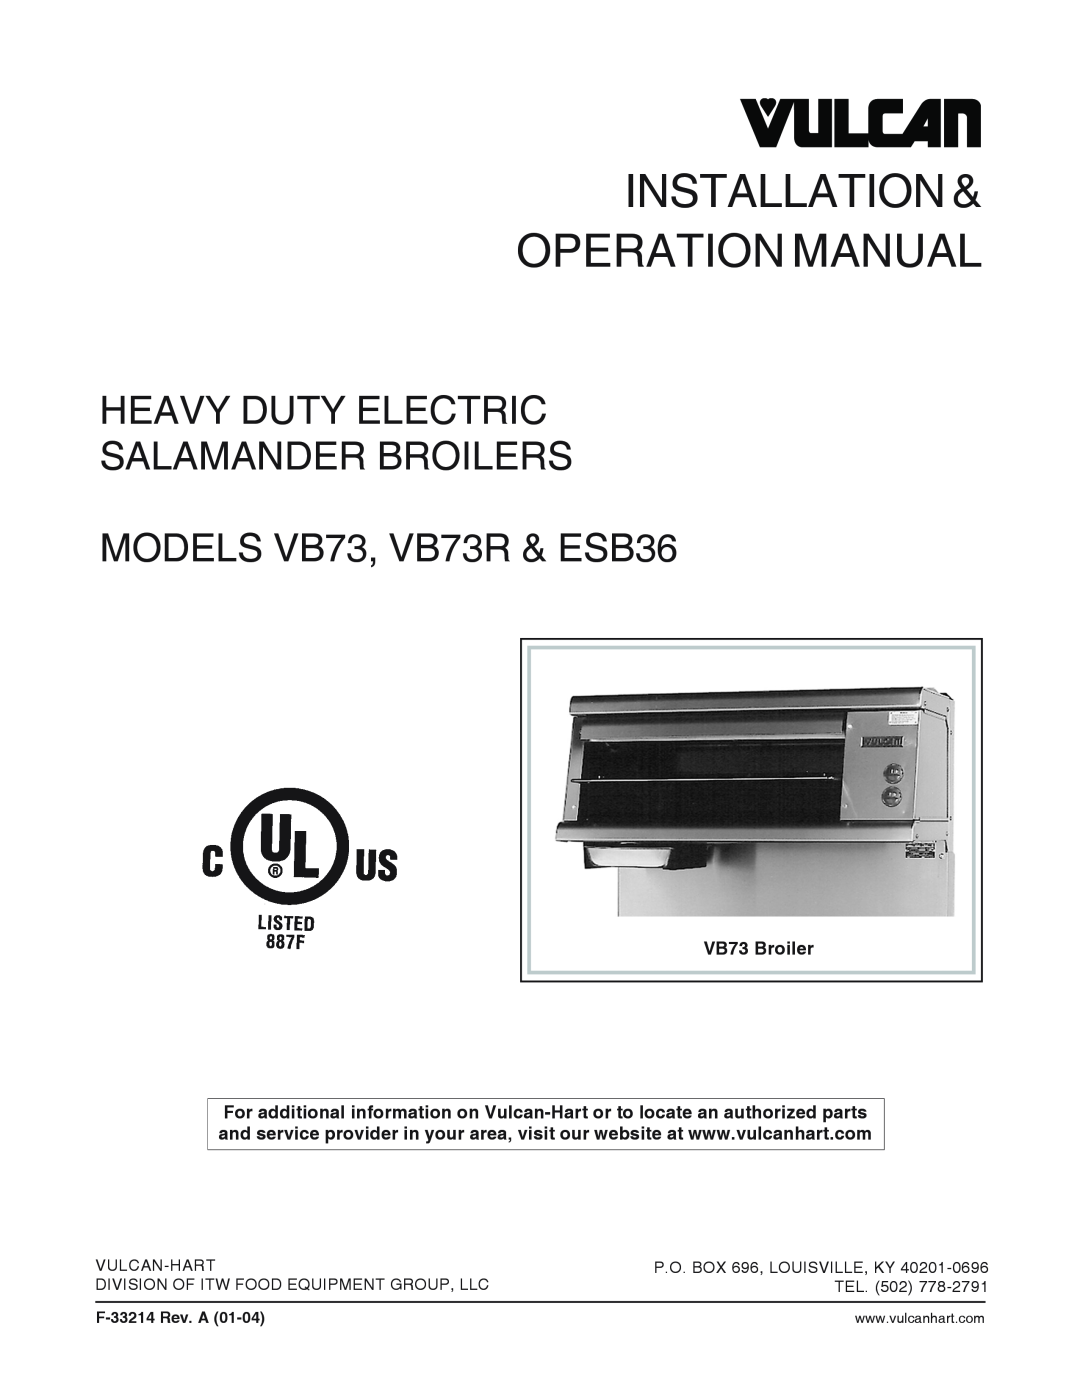 Vulcan-Hart operation manual Heavy Duty Electric Salamander Broilers, MODELS VB73, VB73R & ESB36, VB73 Broiler, Tel 